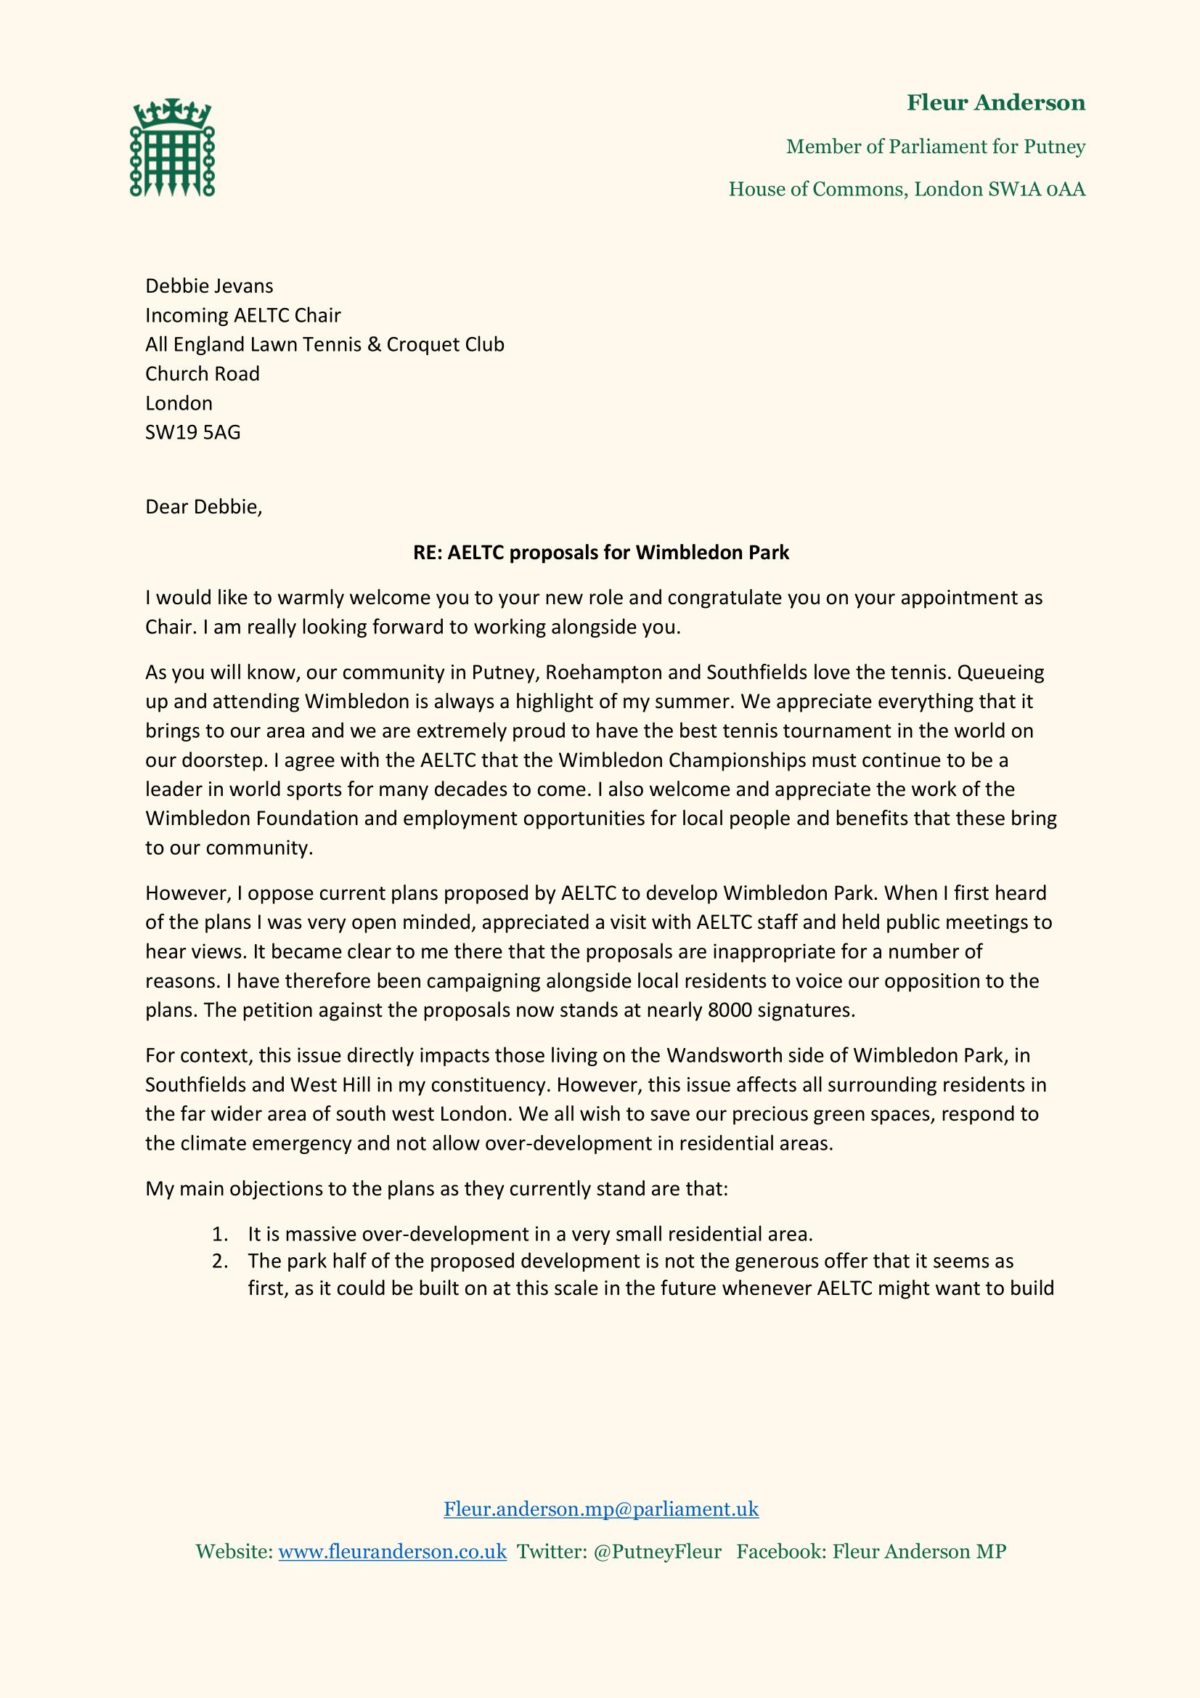 Letter to Incoming Chair of AELTC Debbie Jevans regarding AELTC proposals for Wimbledon Park. 